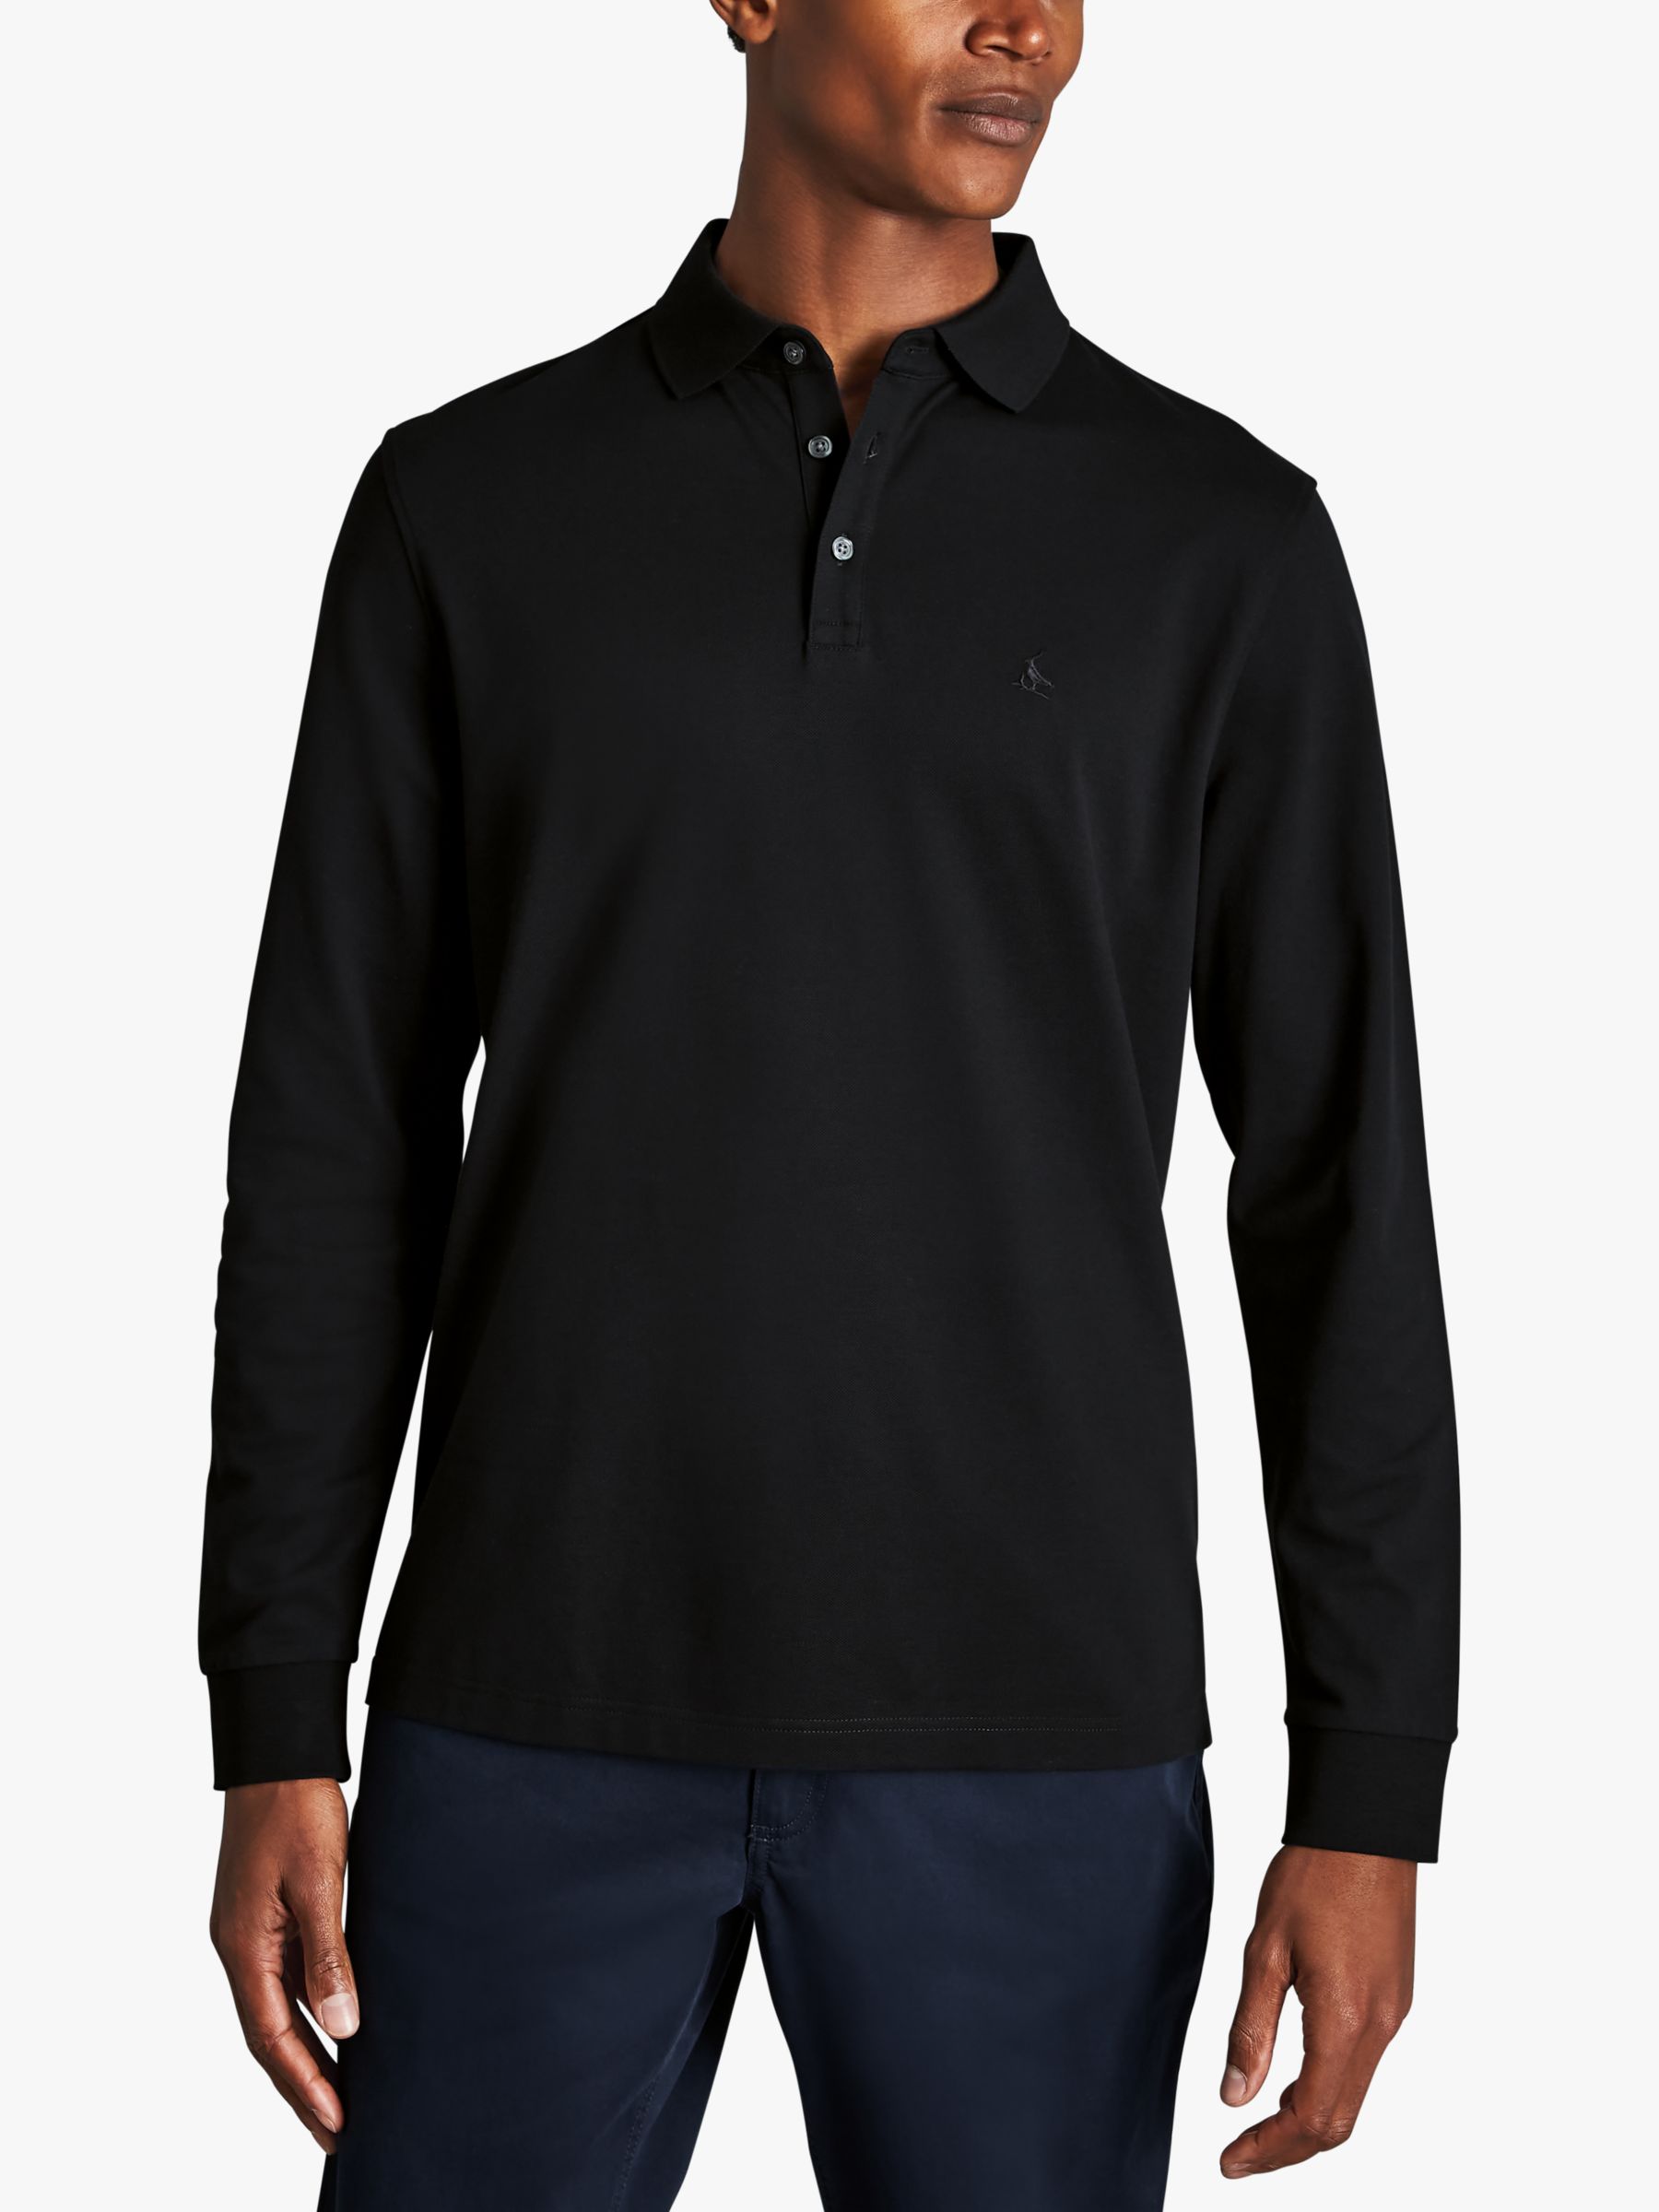 Charles Tyrwhitt Long Sleeve Pique Polo Shirt, Black, S